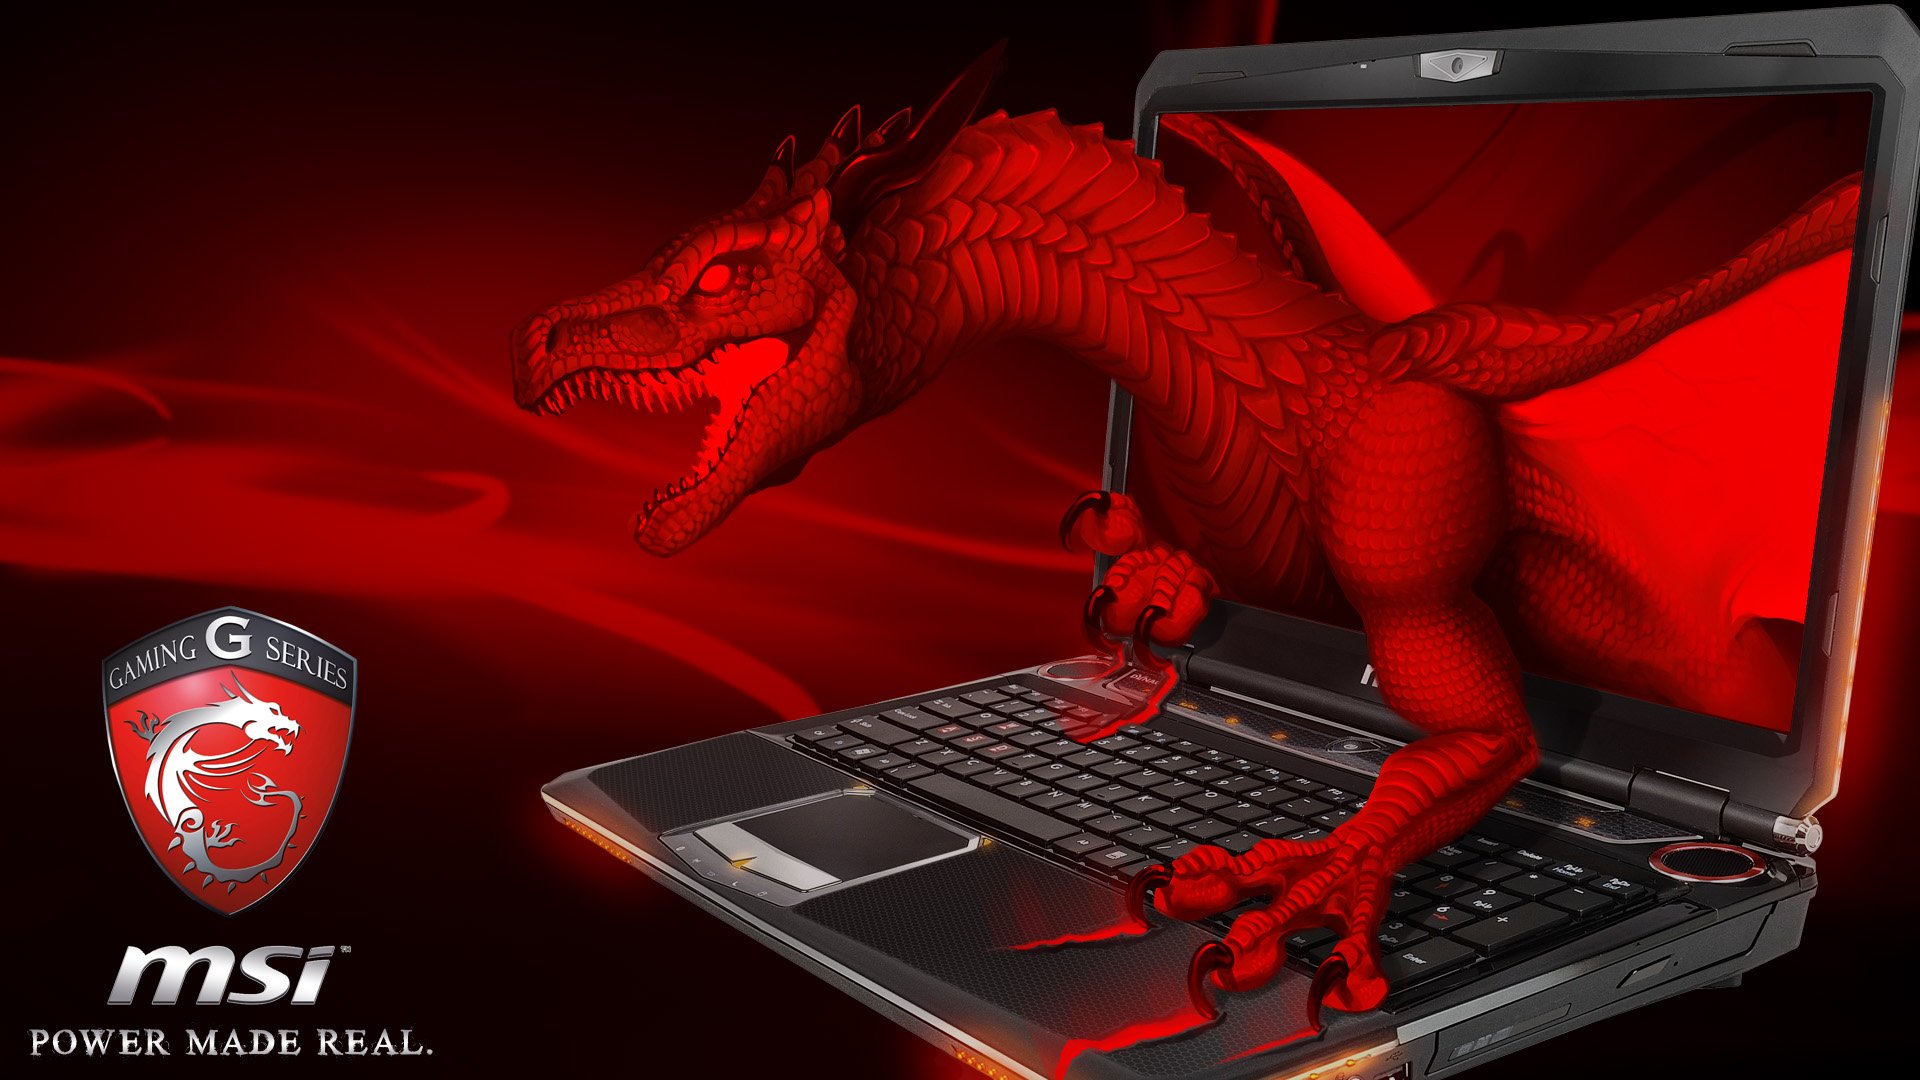 Red pro gaming. Ред драгон ноут. Ноутбук MSI игровой красный. Красный дракон MSI. MSI Dragon 630 ноутбук.